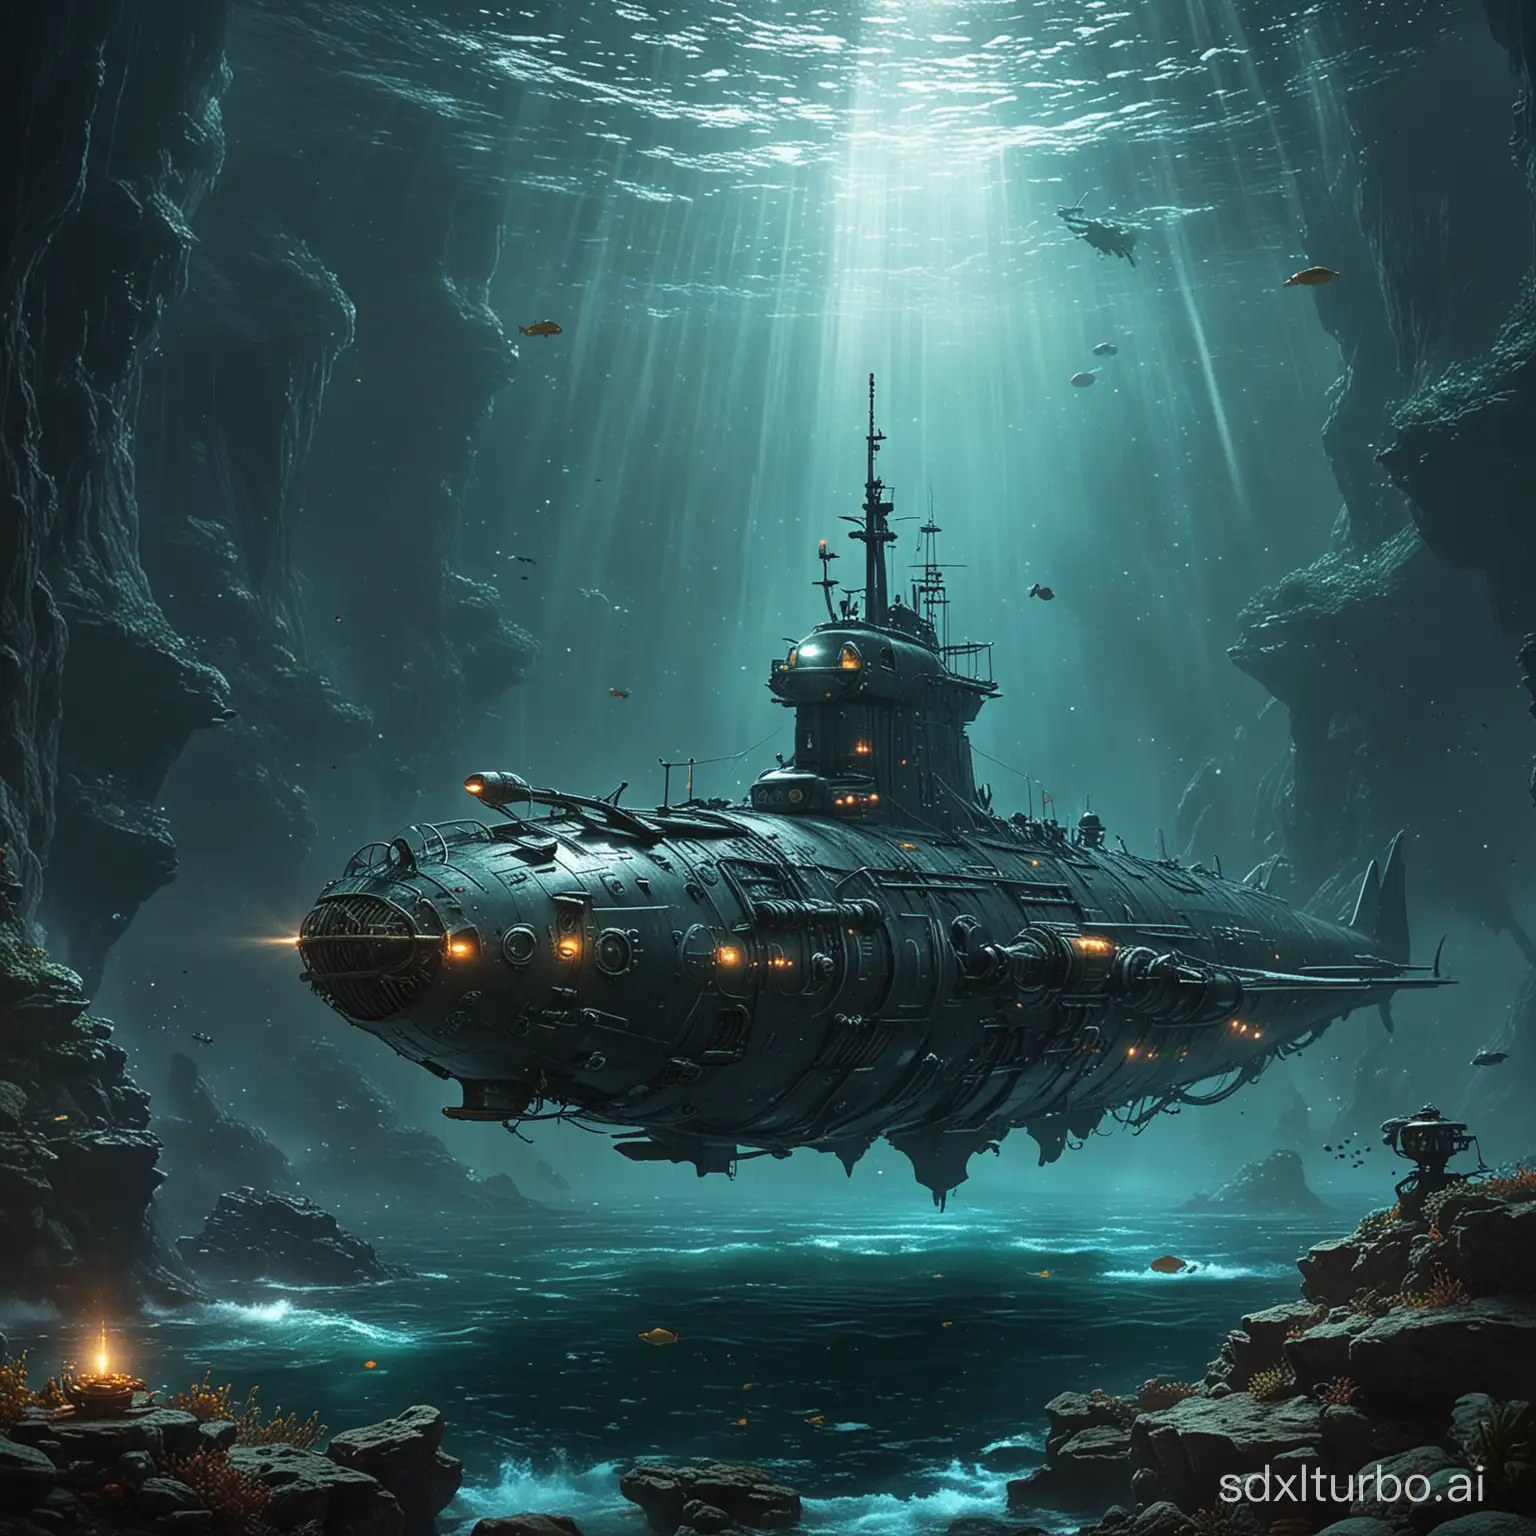 Futuristic-Dragon-Submarine-Exploring-the-Depths-of-Science-Fiction